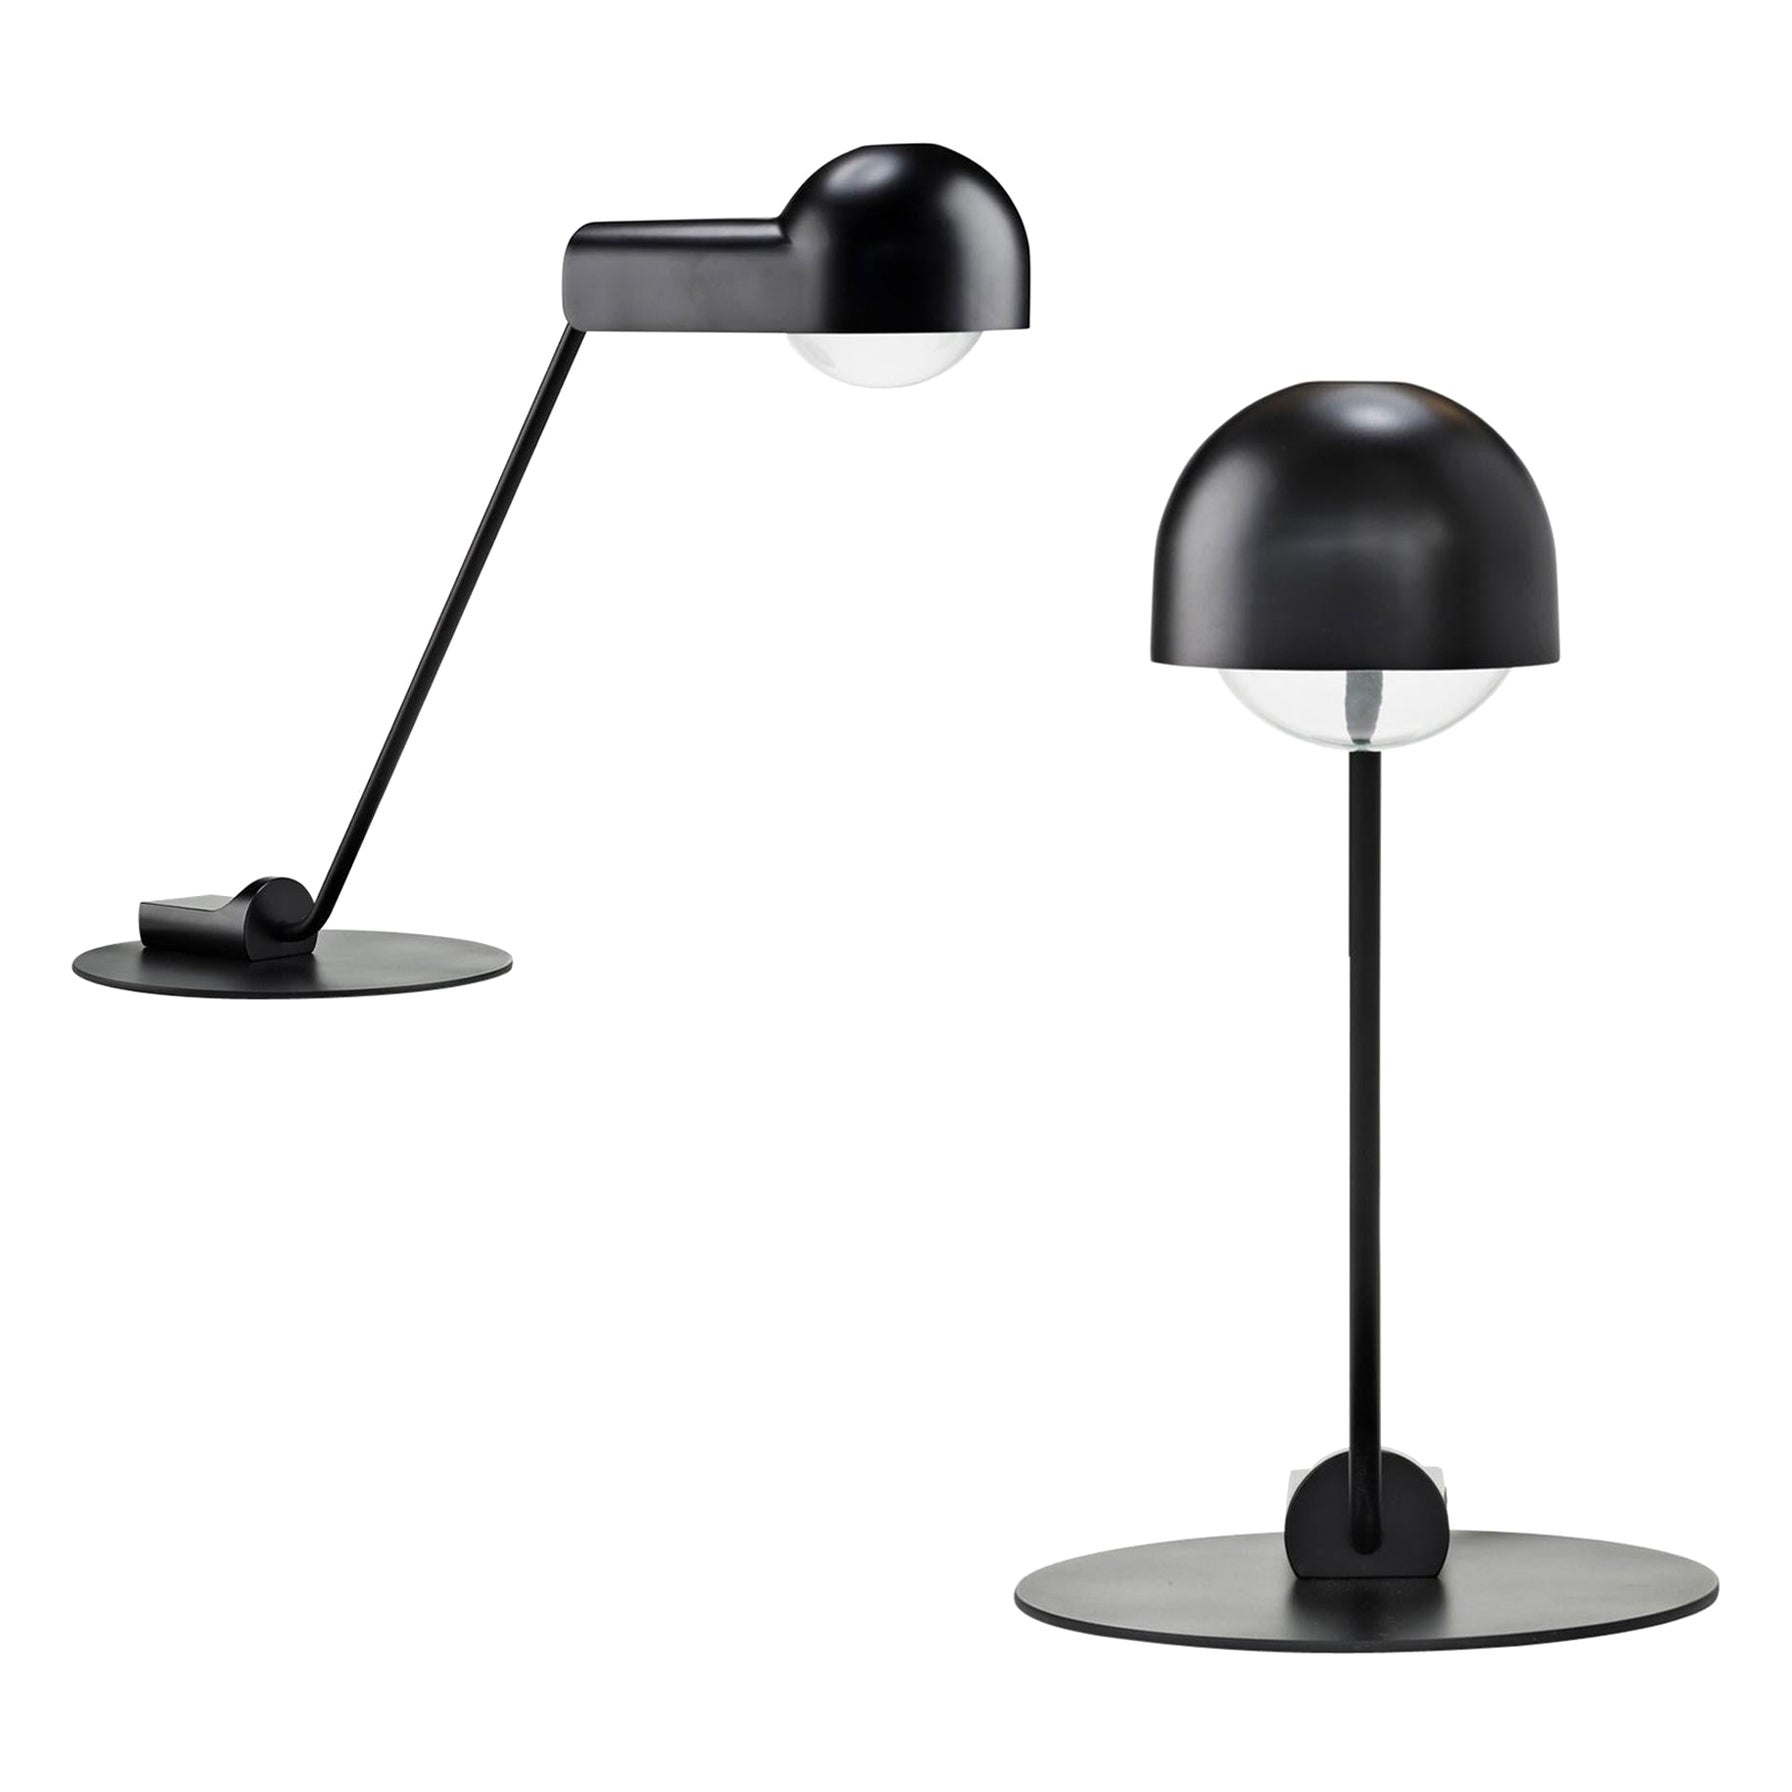 Set of Two Joe Colombo 'Domo' Steel Table Lamps by Karakter For Sale